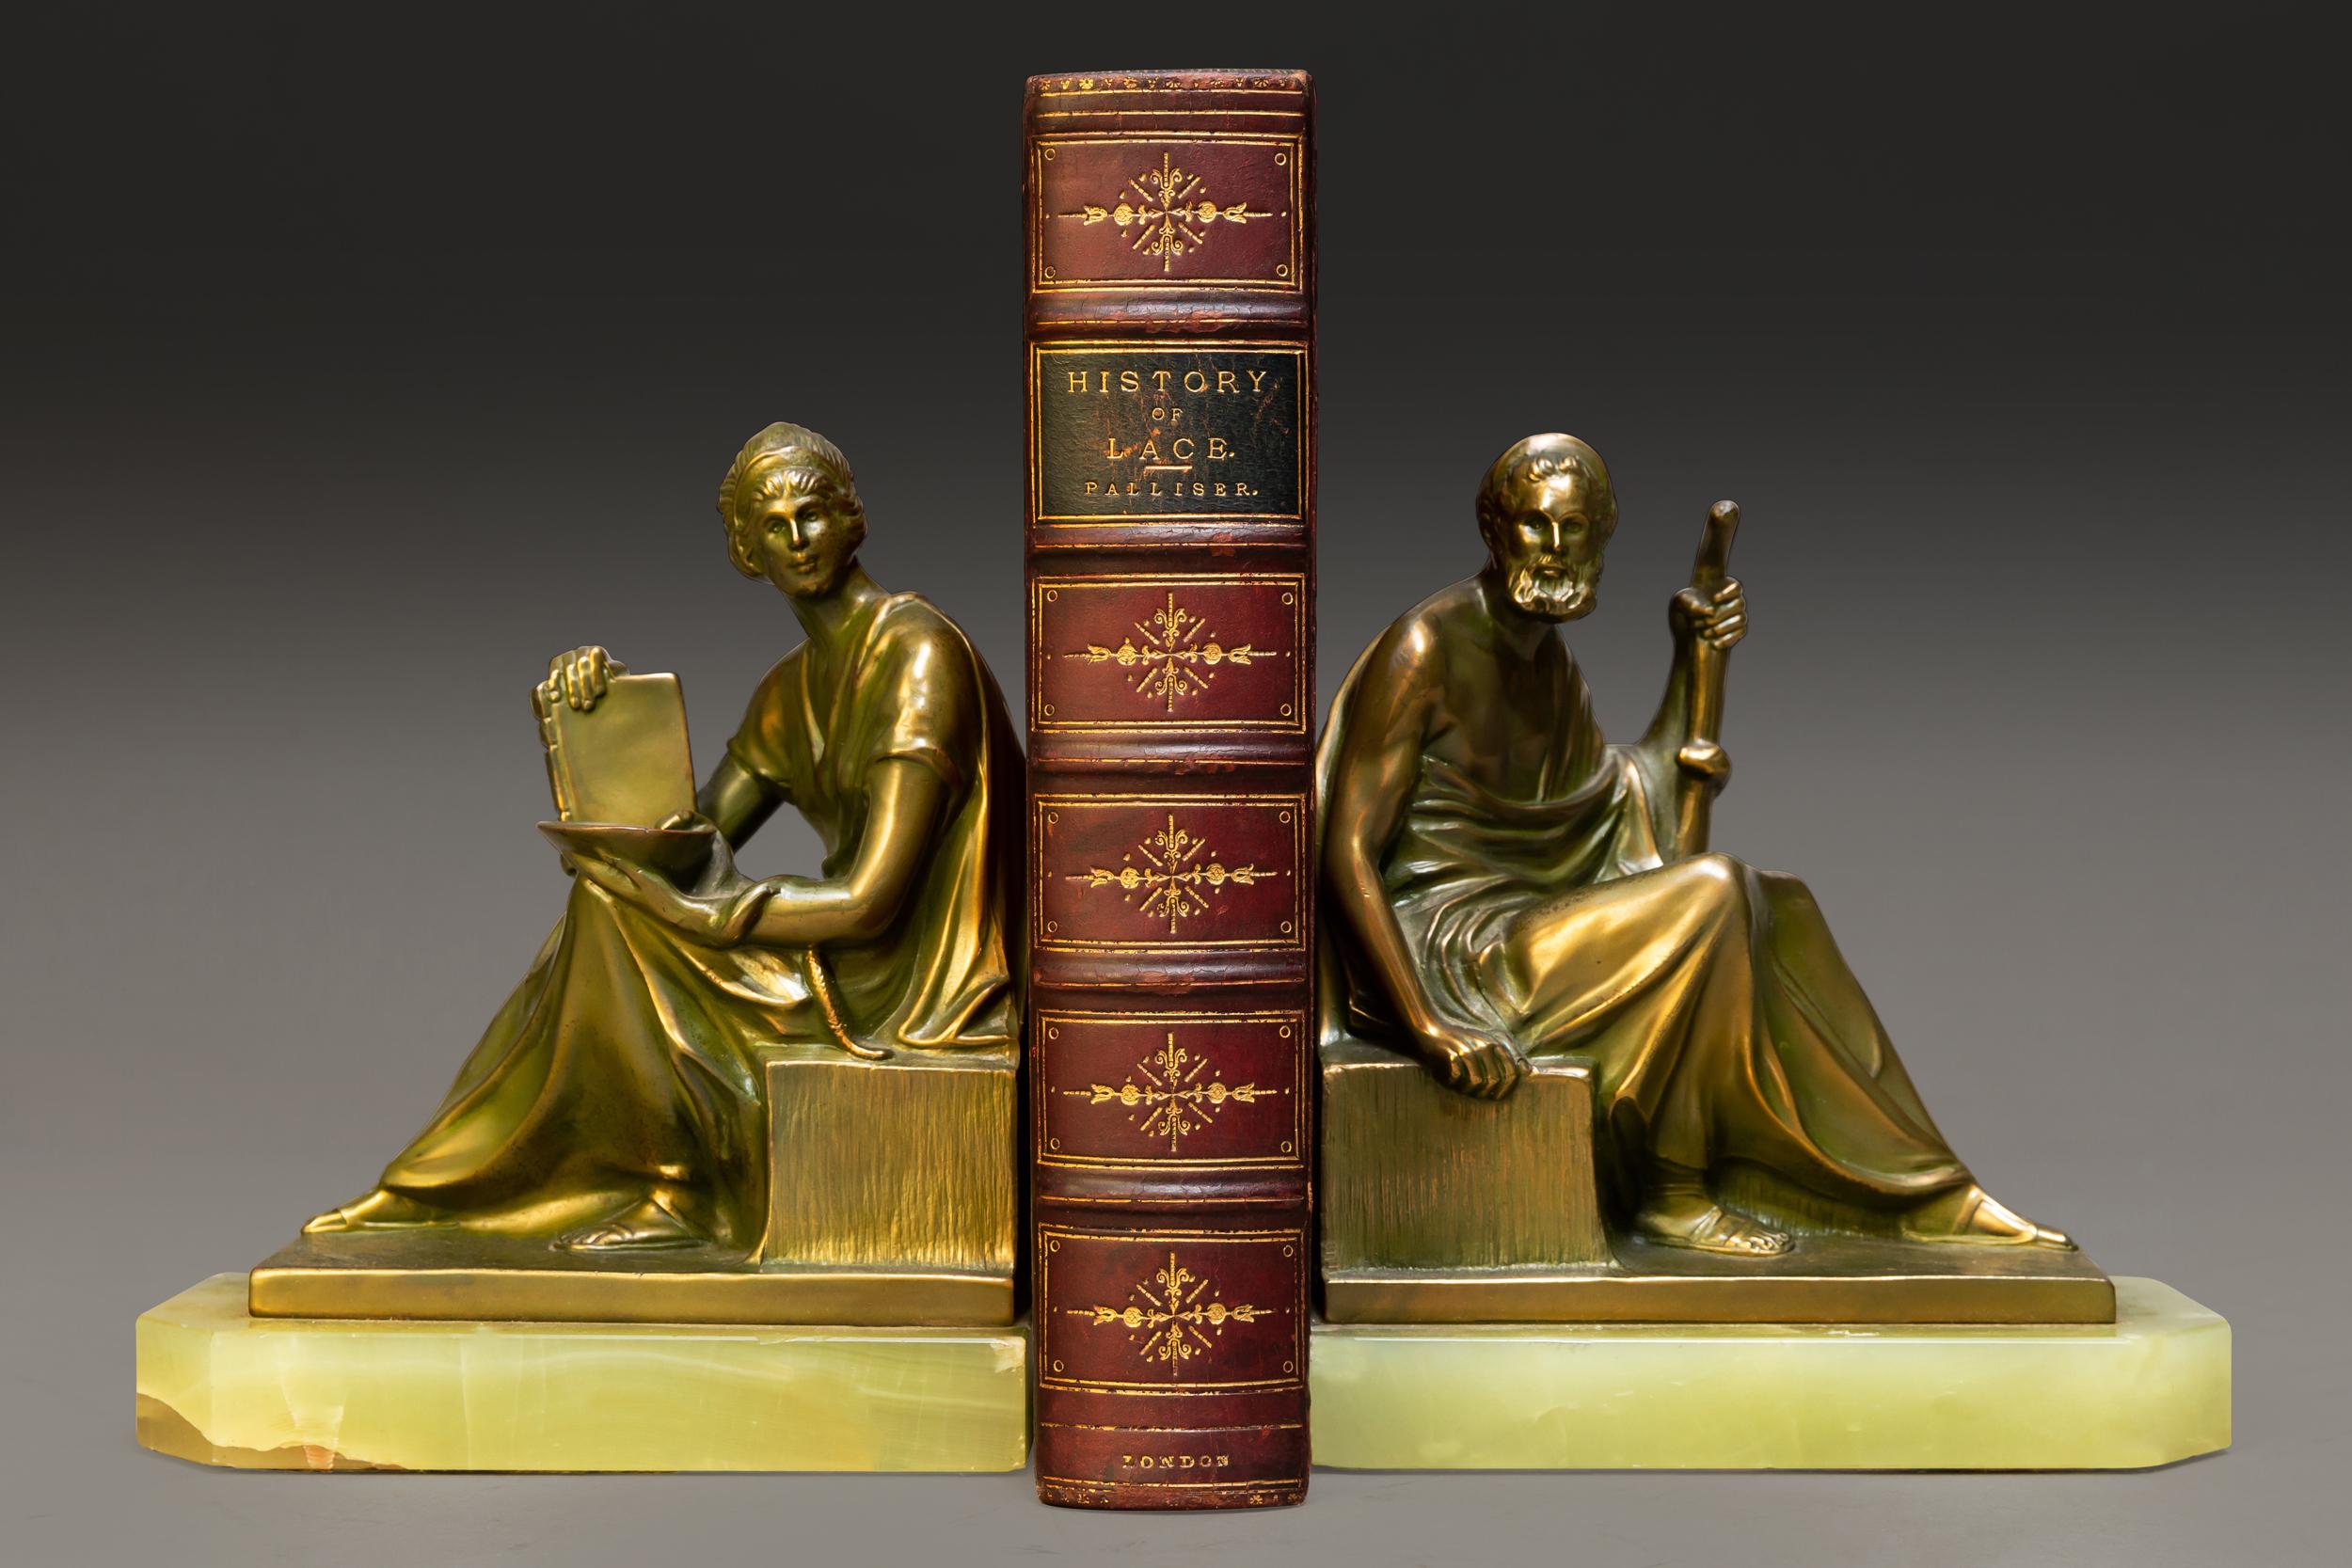 19th Century 'Book Sets' 1 Volume, Mrs. Bury Palliser, History of Lace